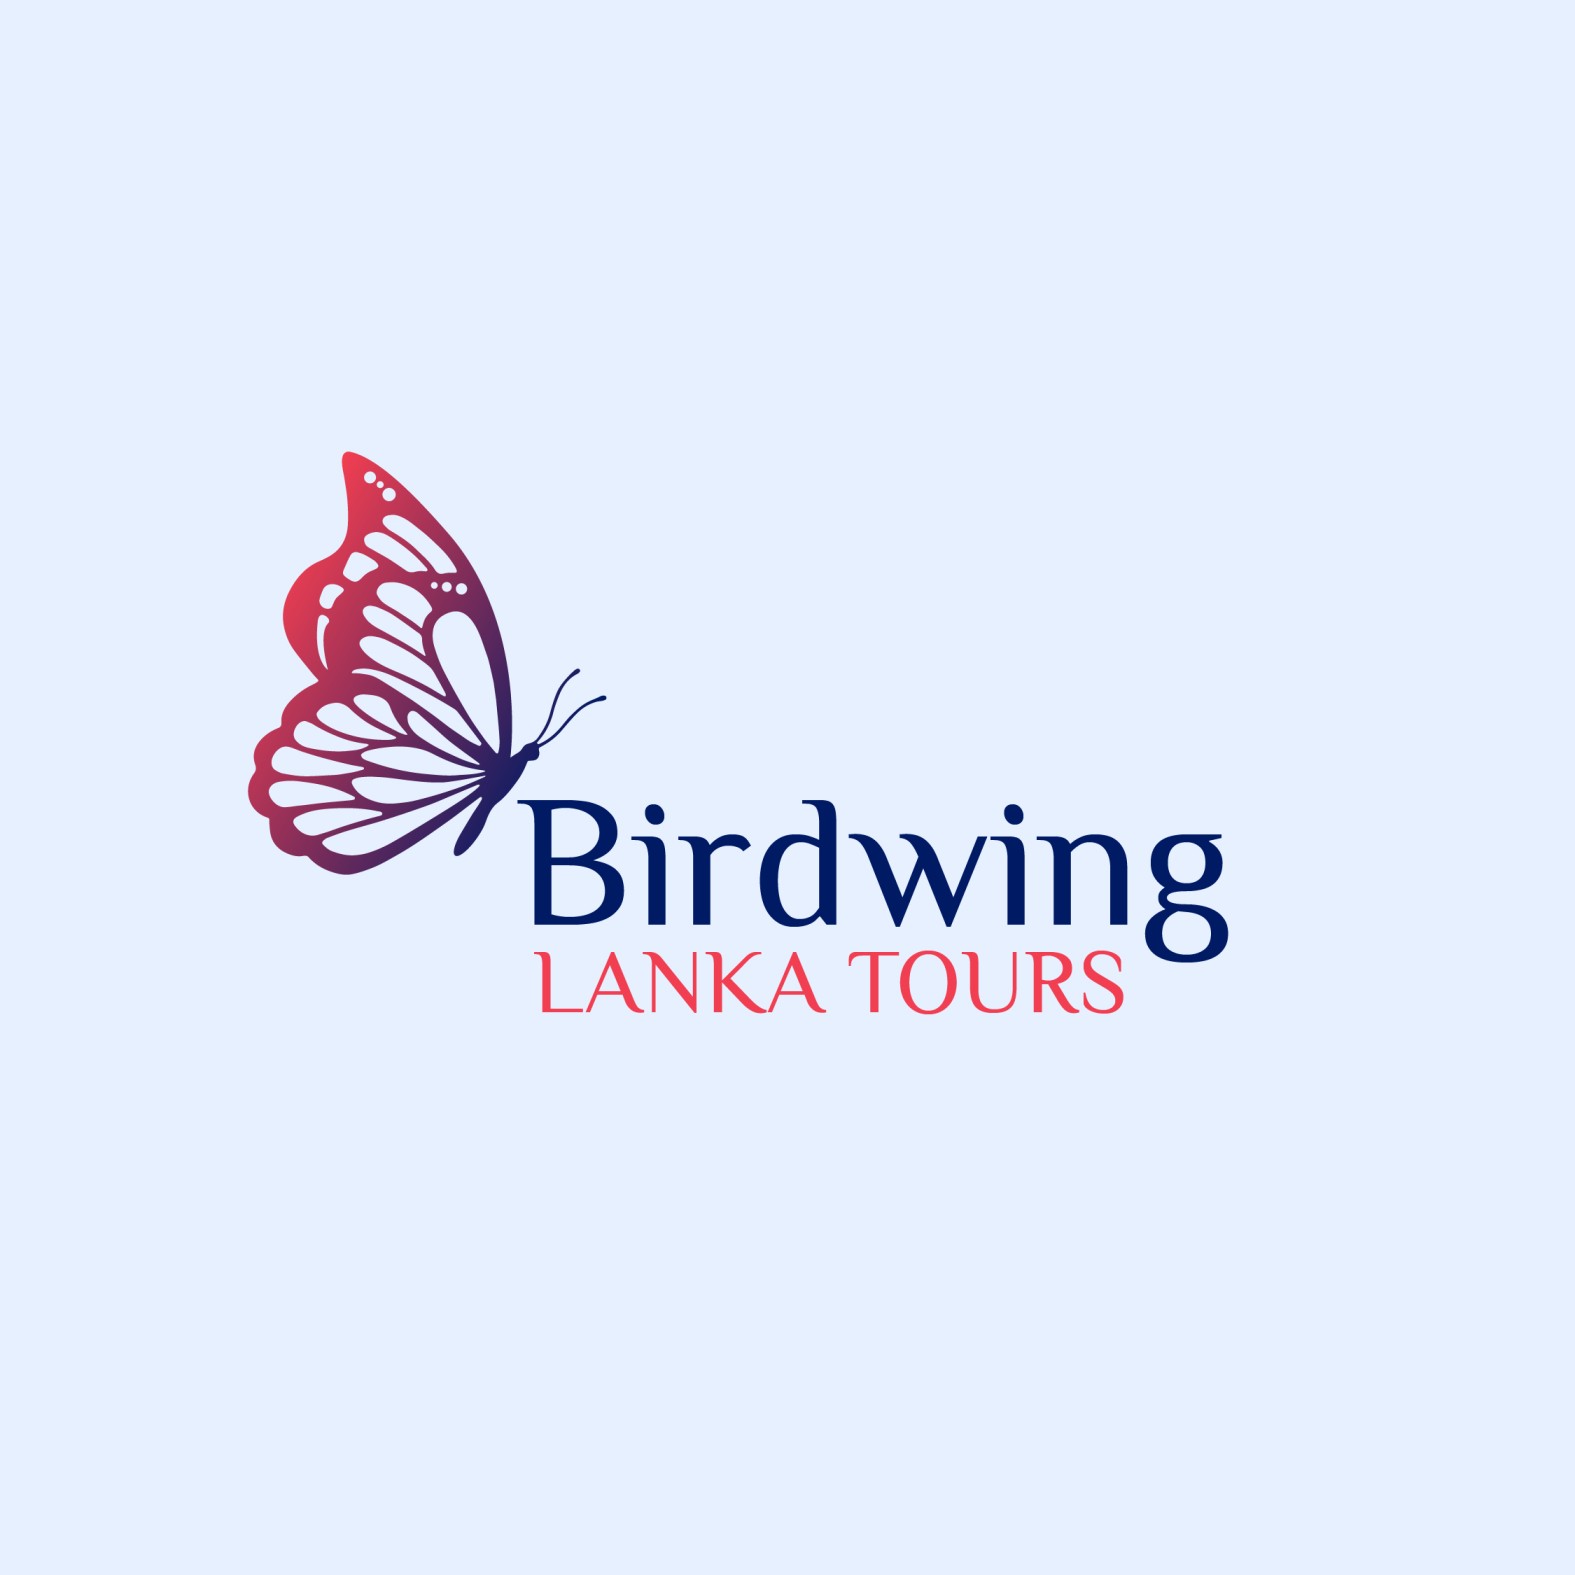 Birdwing Lanka Tours Logo Design Project